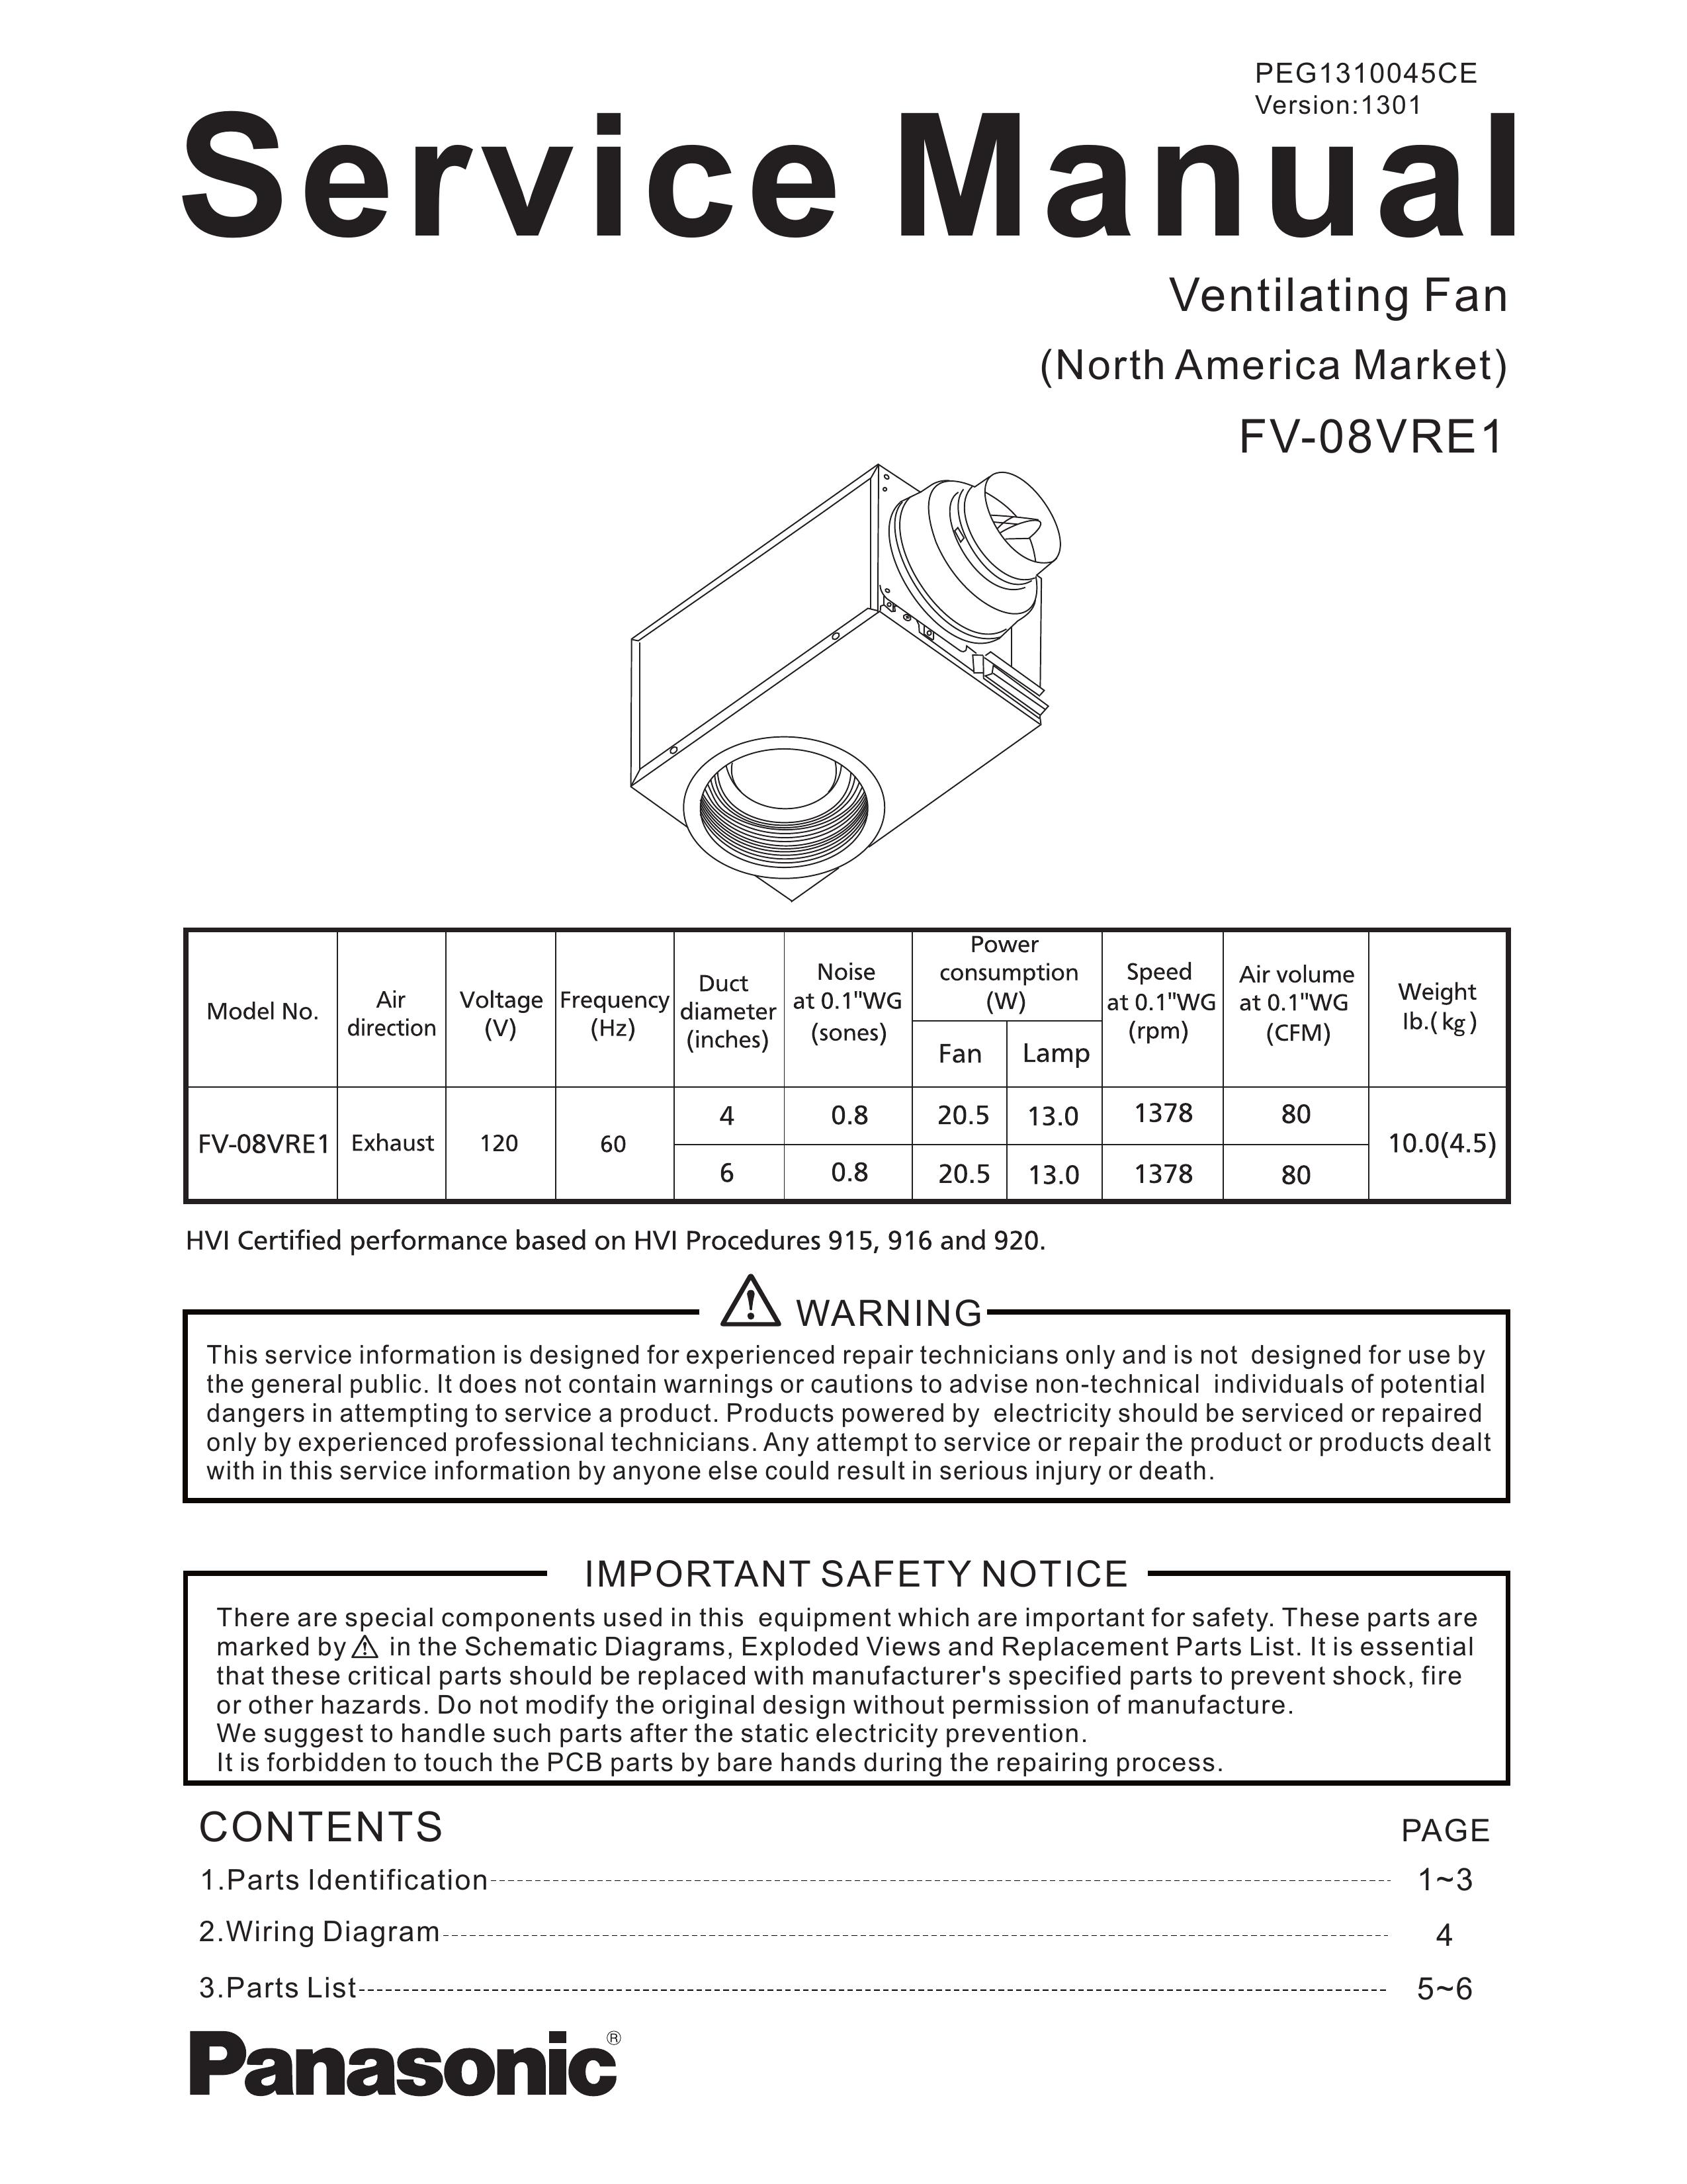 Panasonic FV-08VRE1 Ventilation Hood User Manual